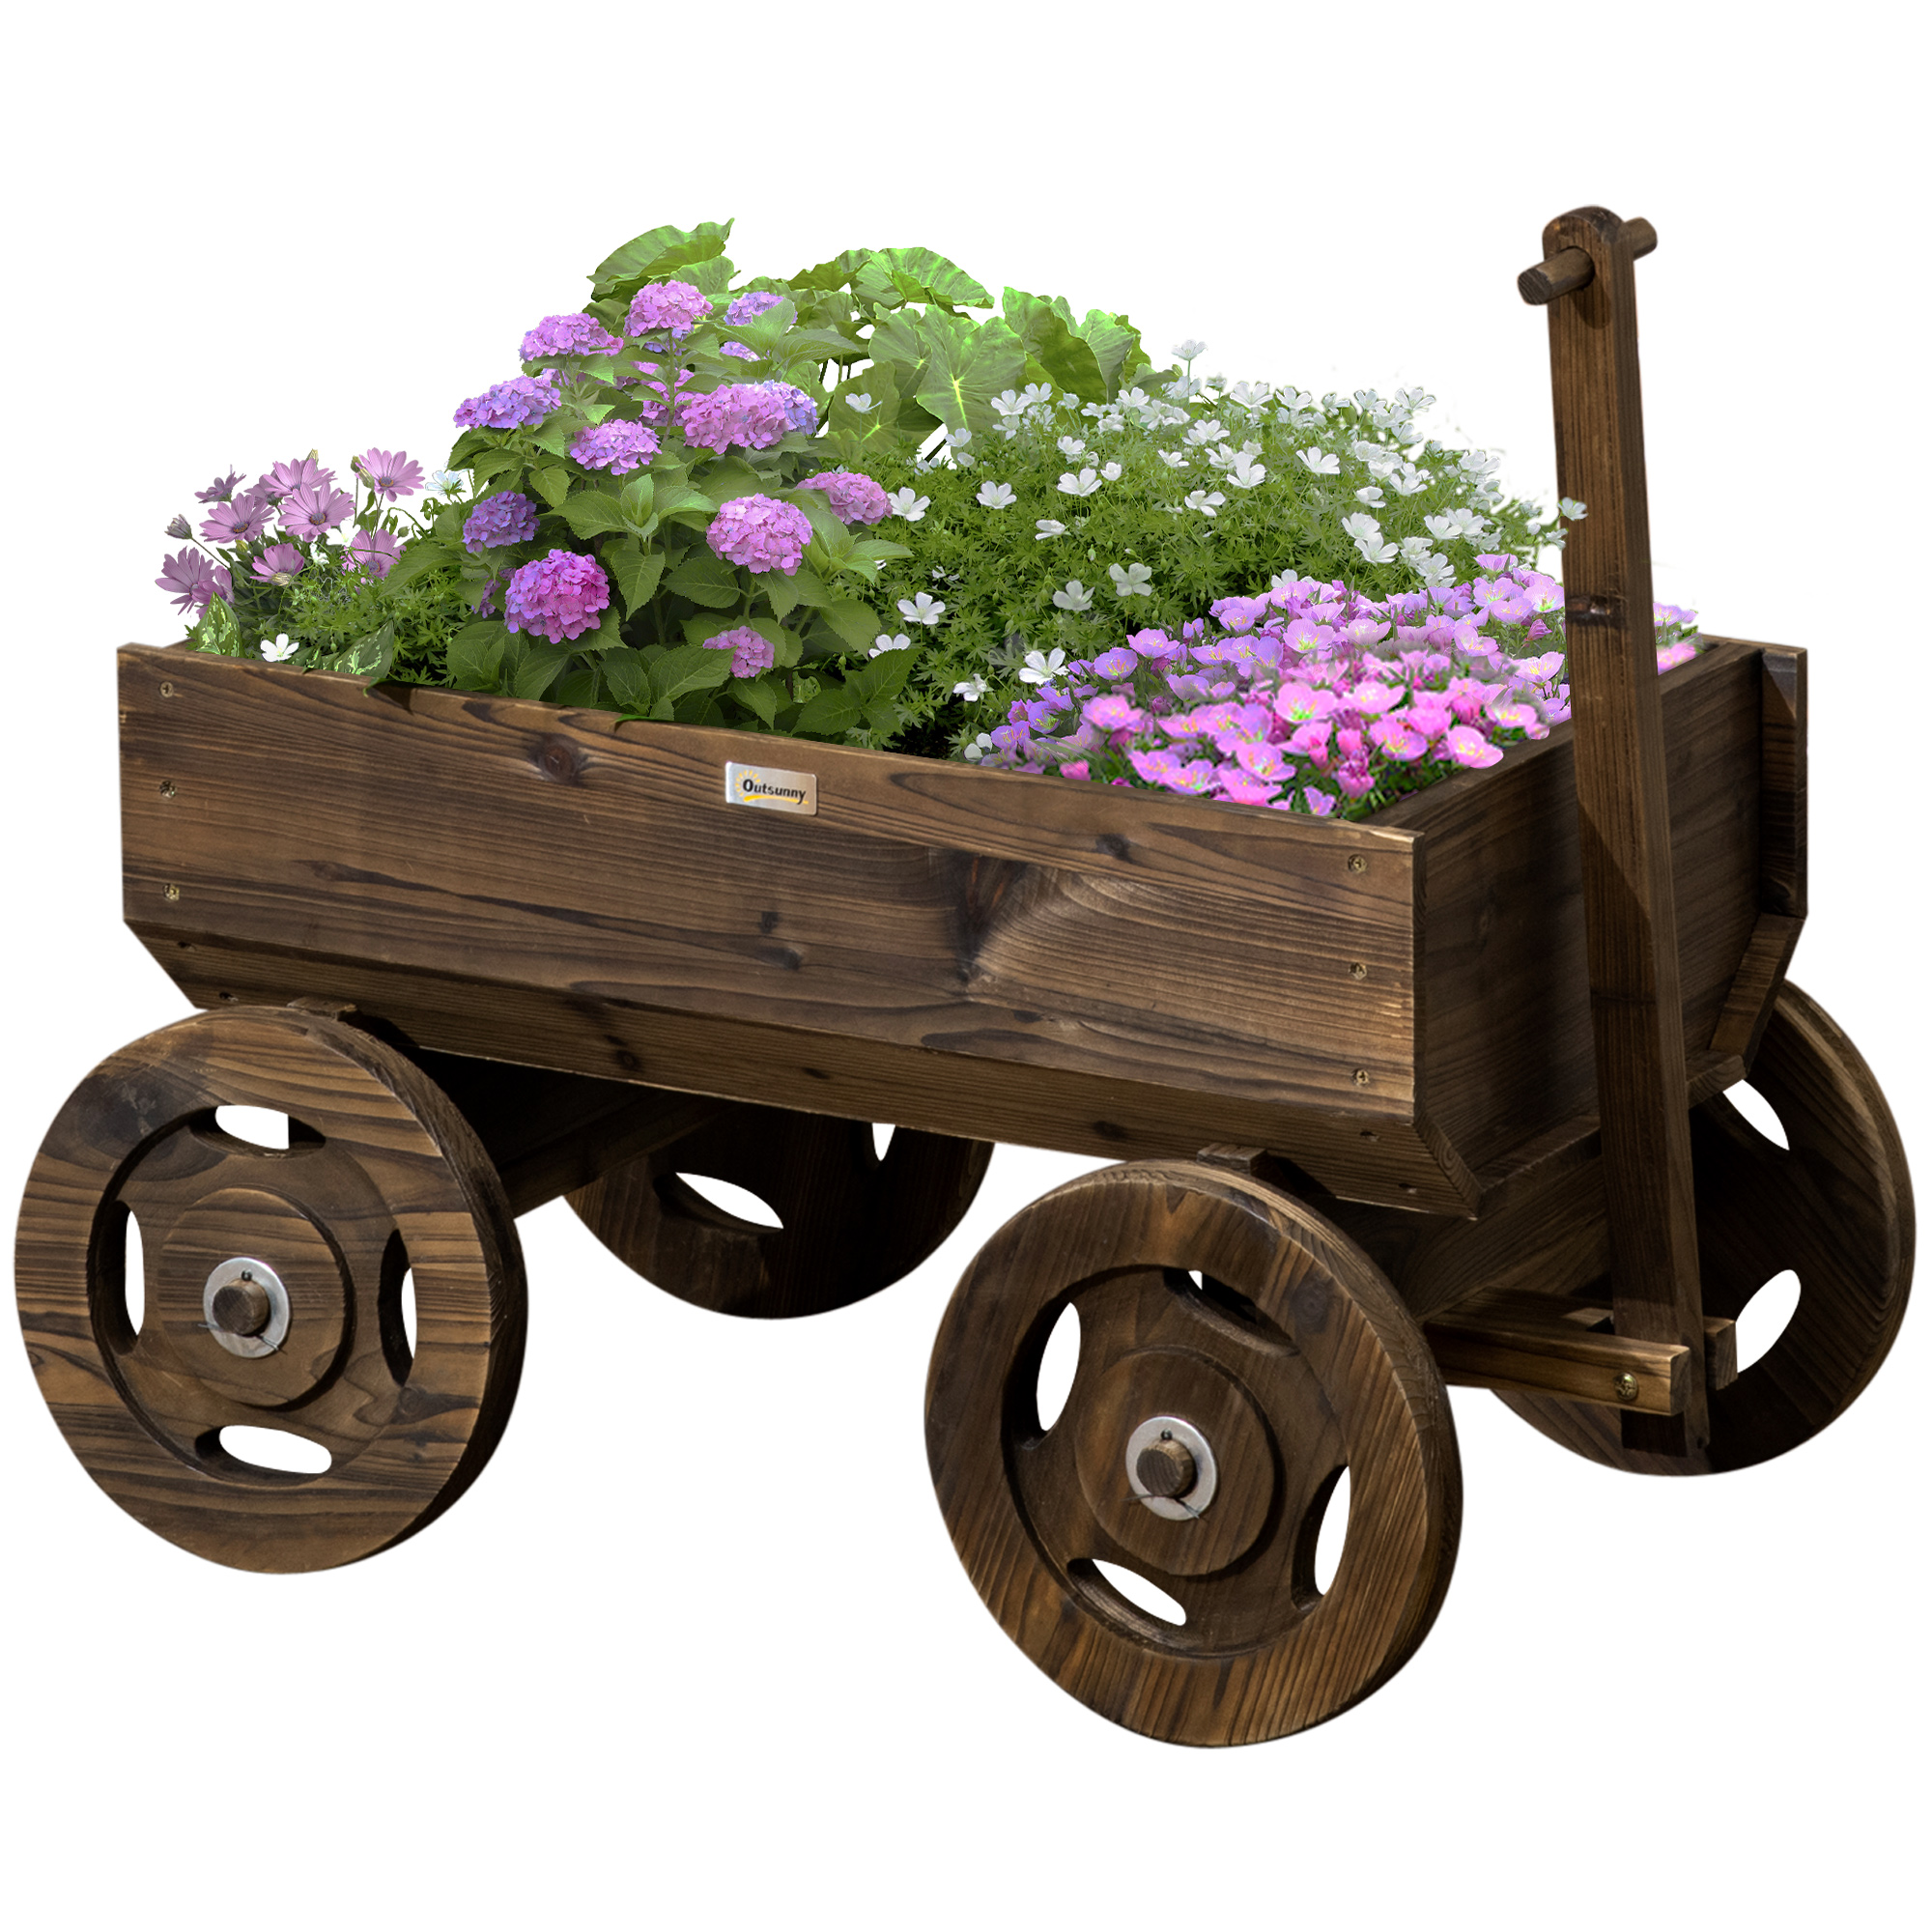 Wooden Flower Cart Raised Garden Bed Planters w/ Wheels